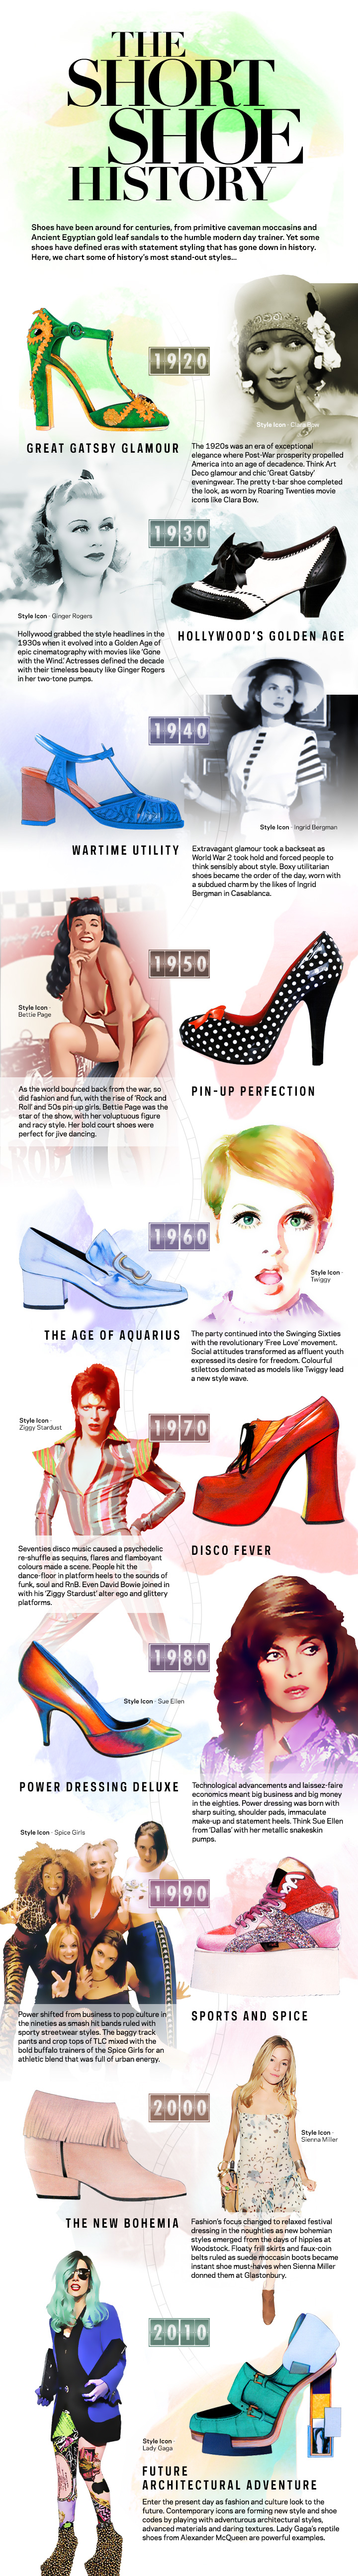 Short Shoe History Graphic